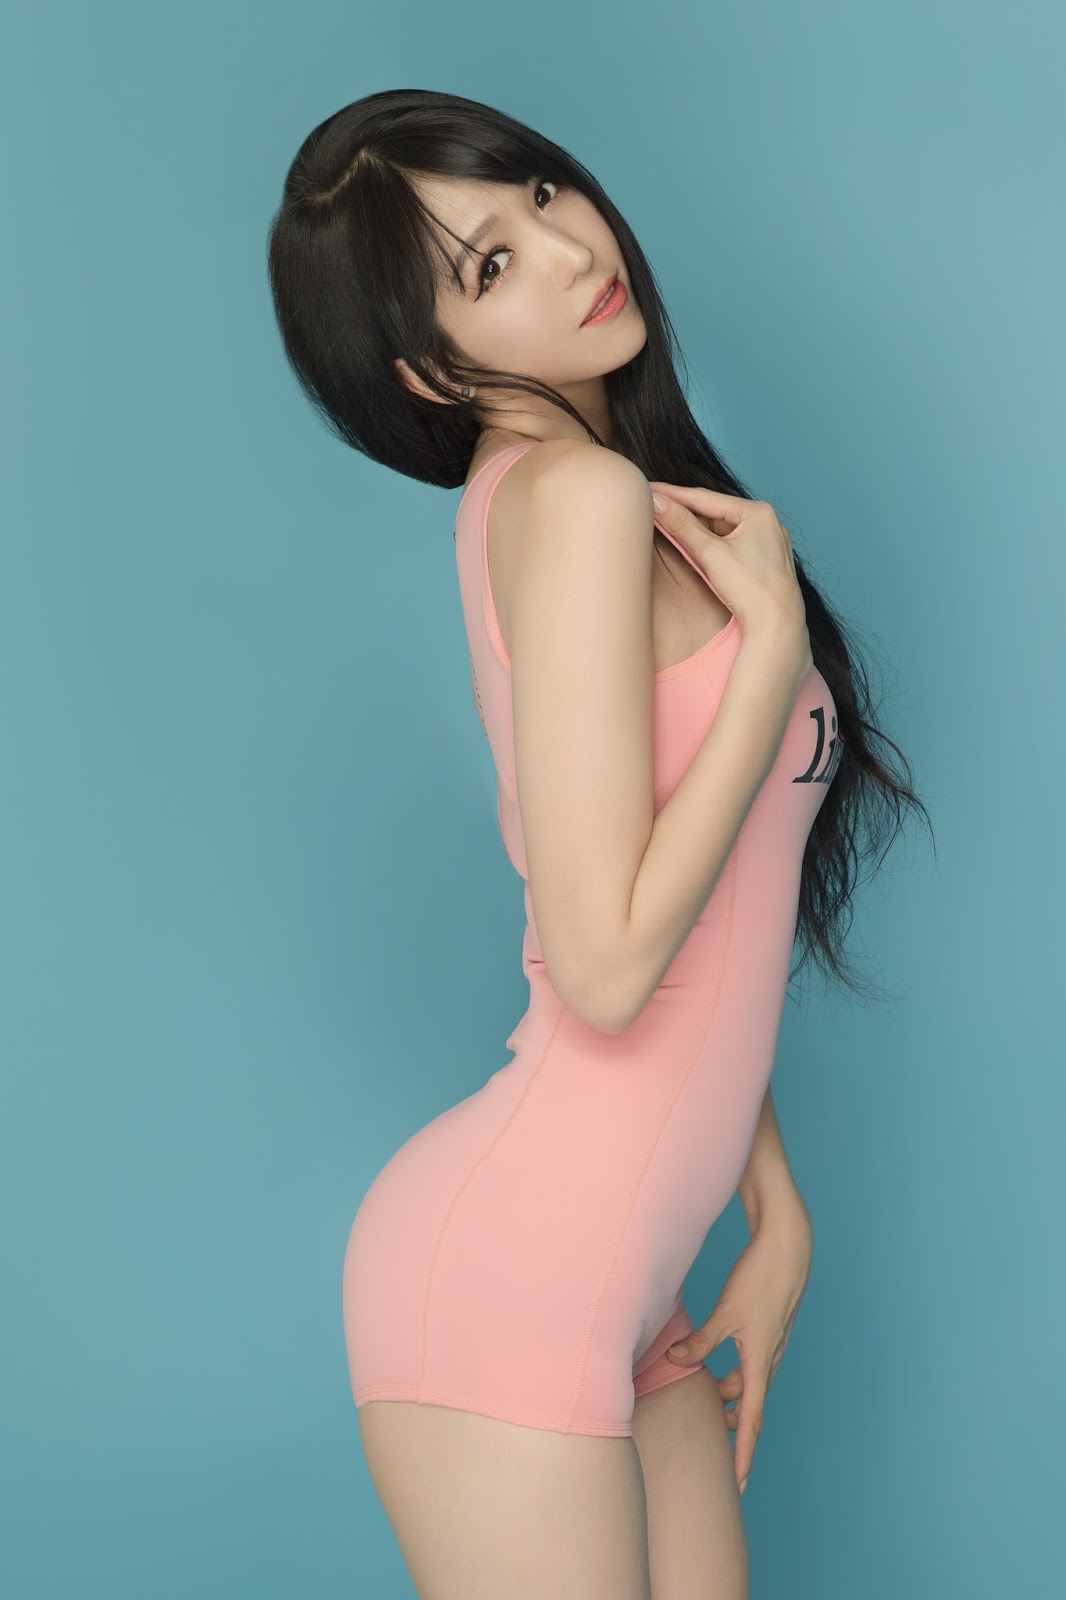 Korean Model Lee Eun Hye in Fashion Photoshoot June 2017 